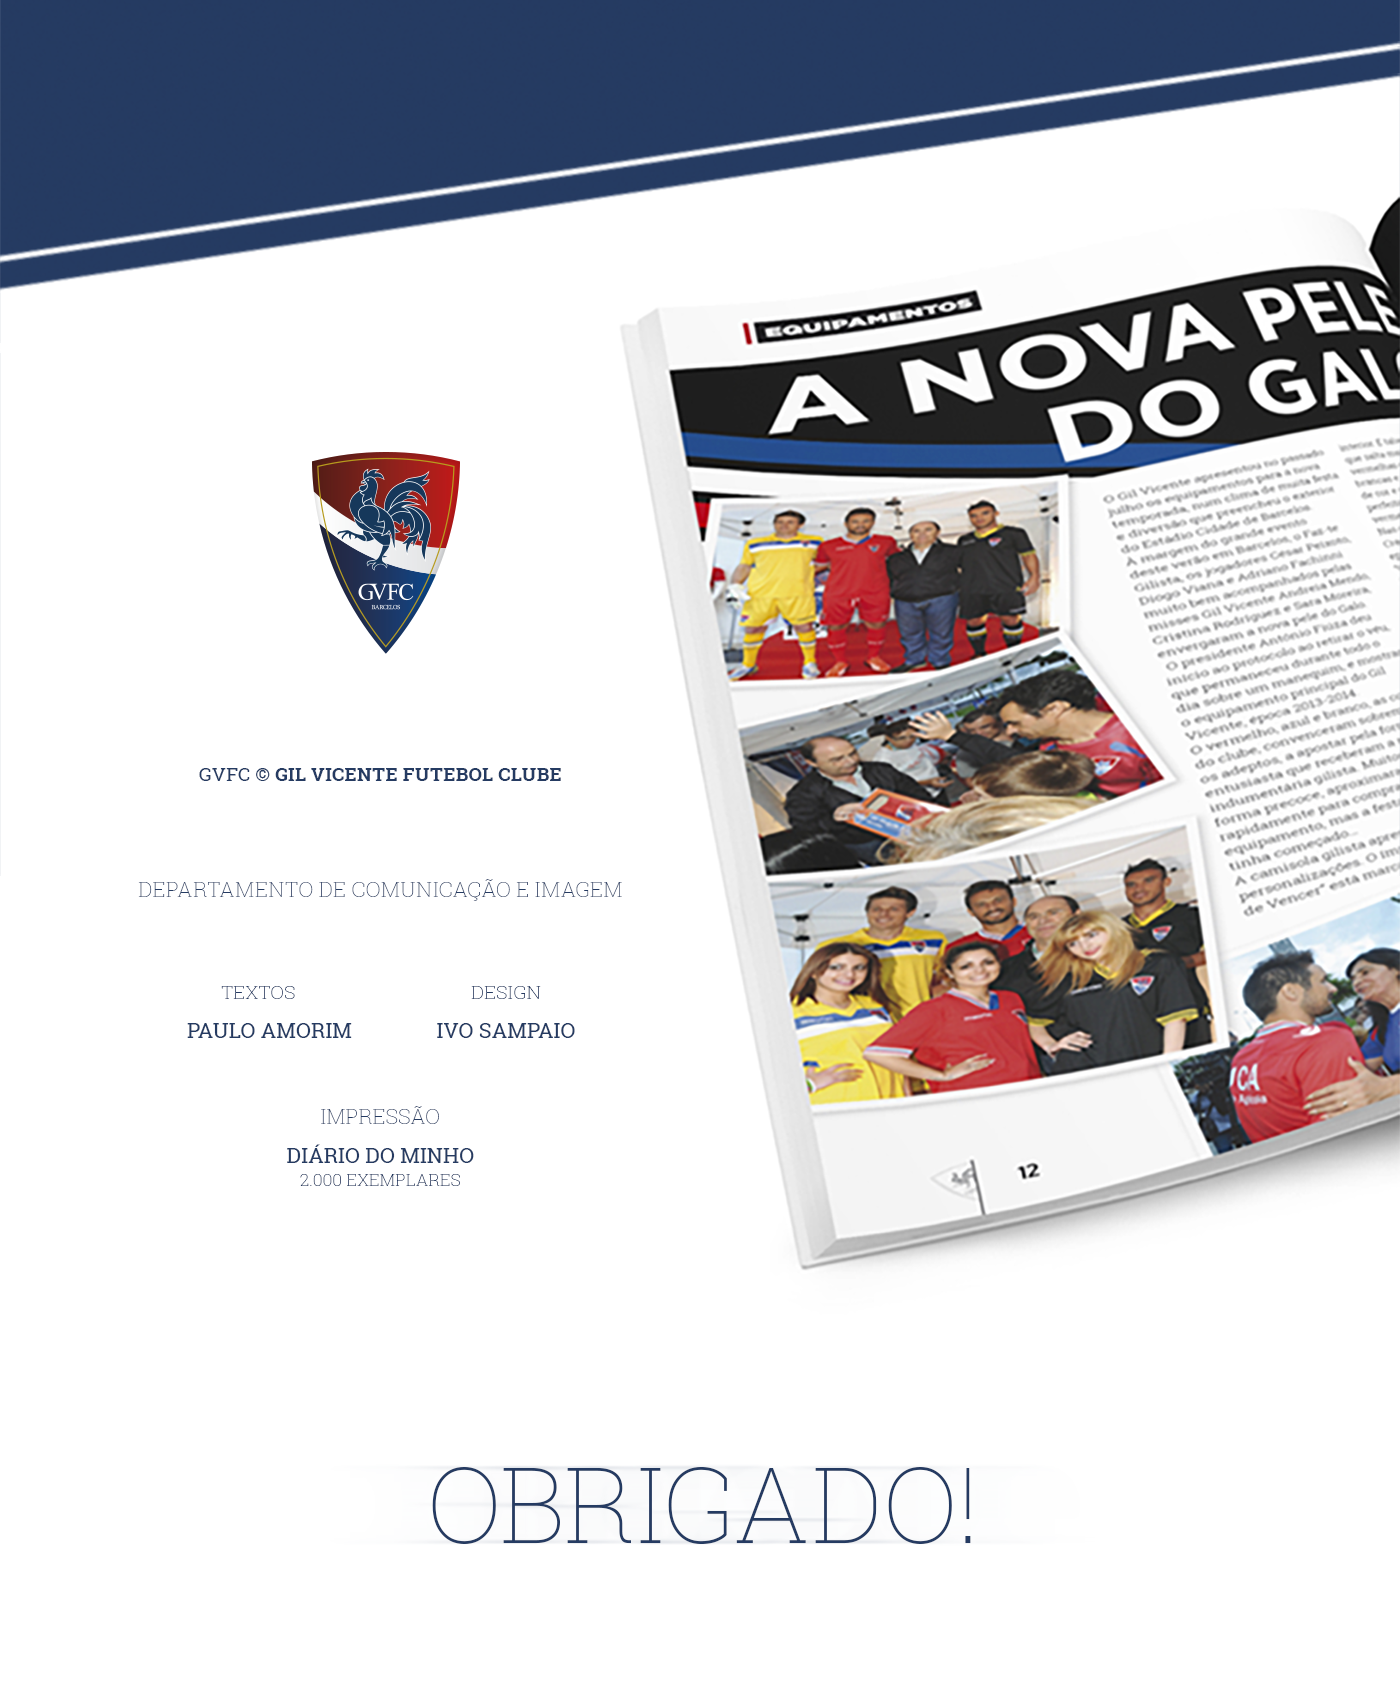 gvfc gilista N4 gil gil vicente FC sport football futebol soccer magazine clube Barcelos revista